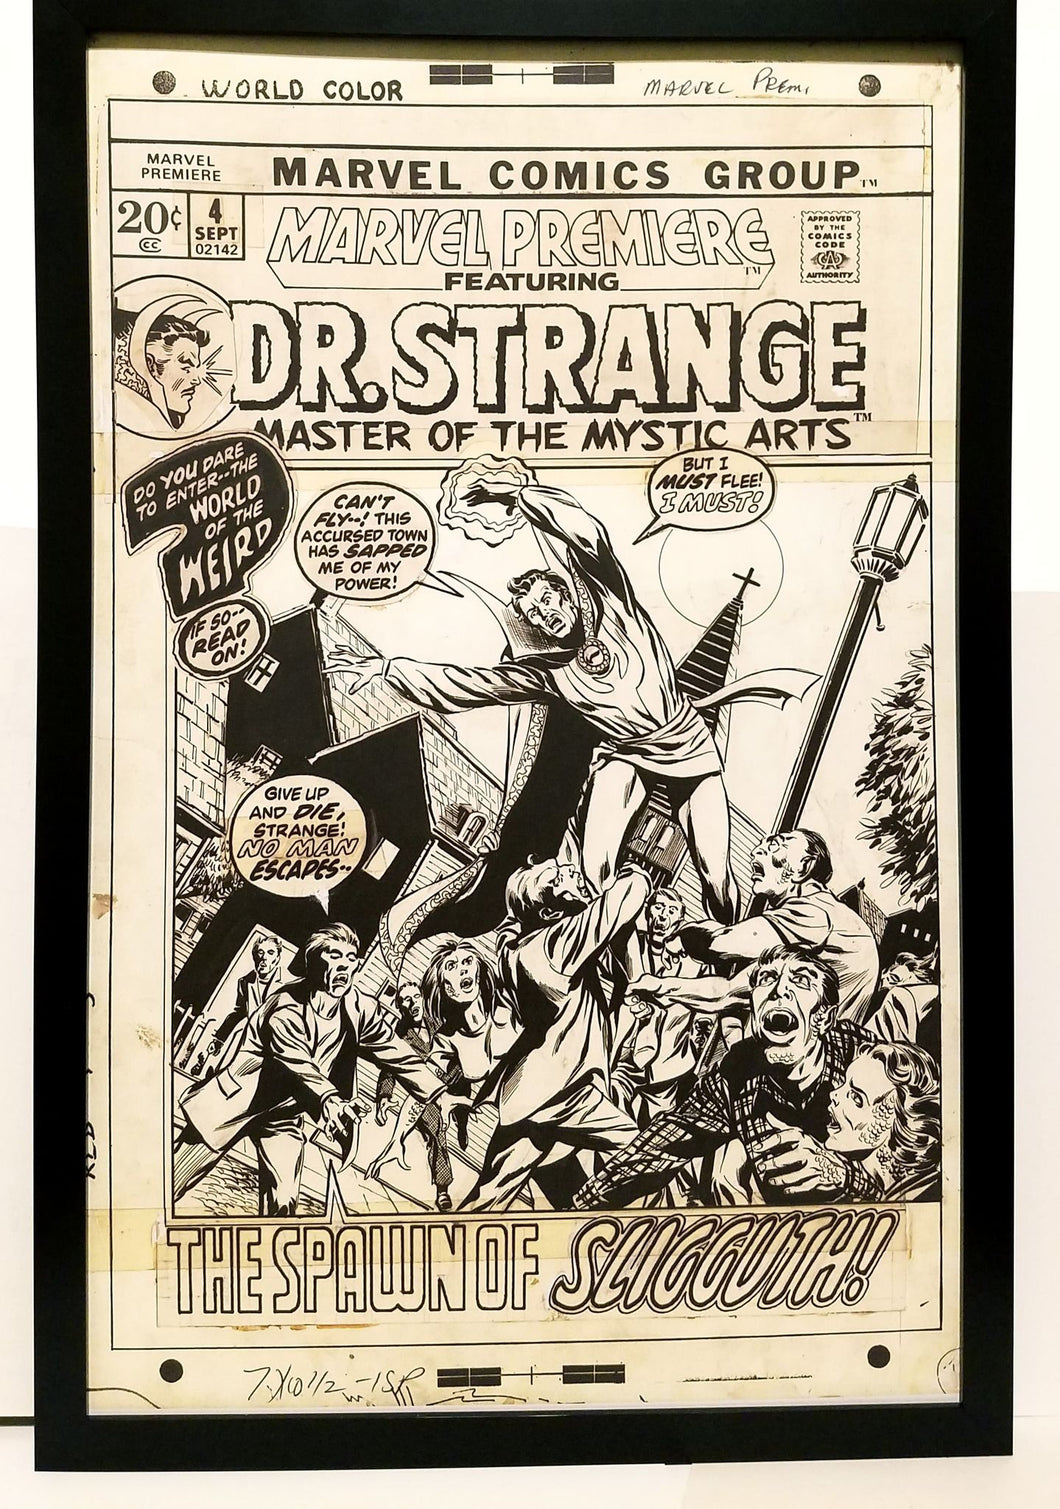 Marvel Premiere #4 by Barry Windsor-Smith 11x17 FRAMED Original Art Poster Comics